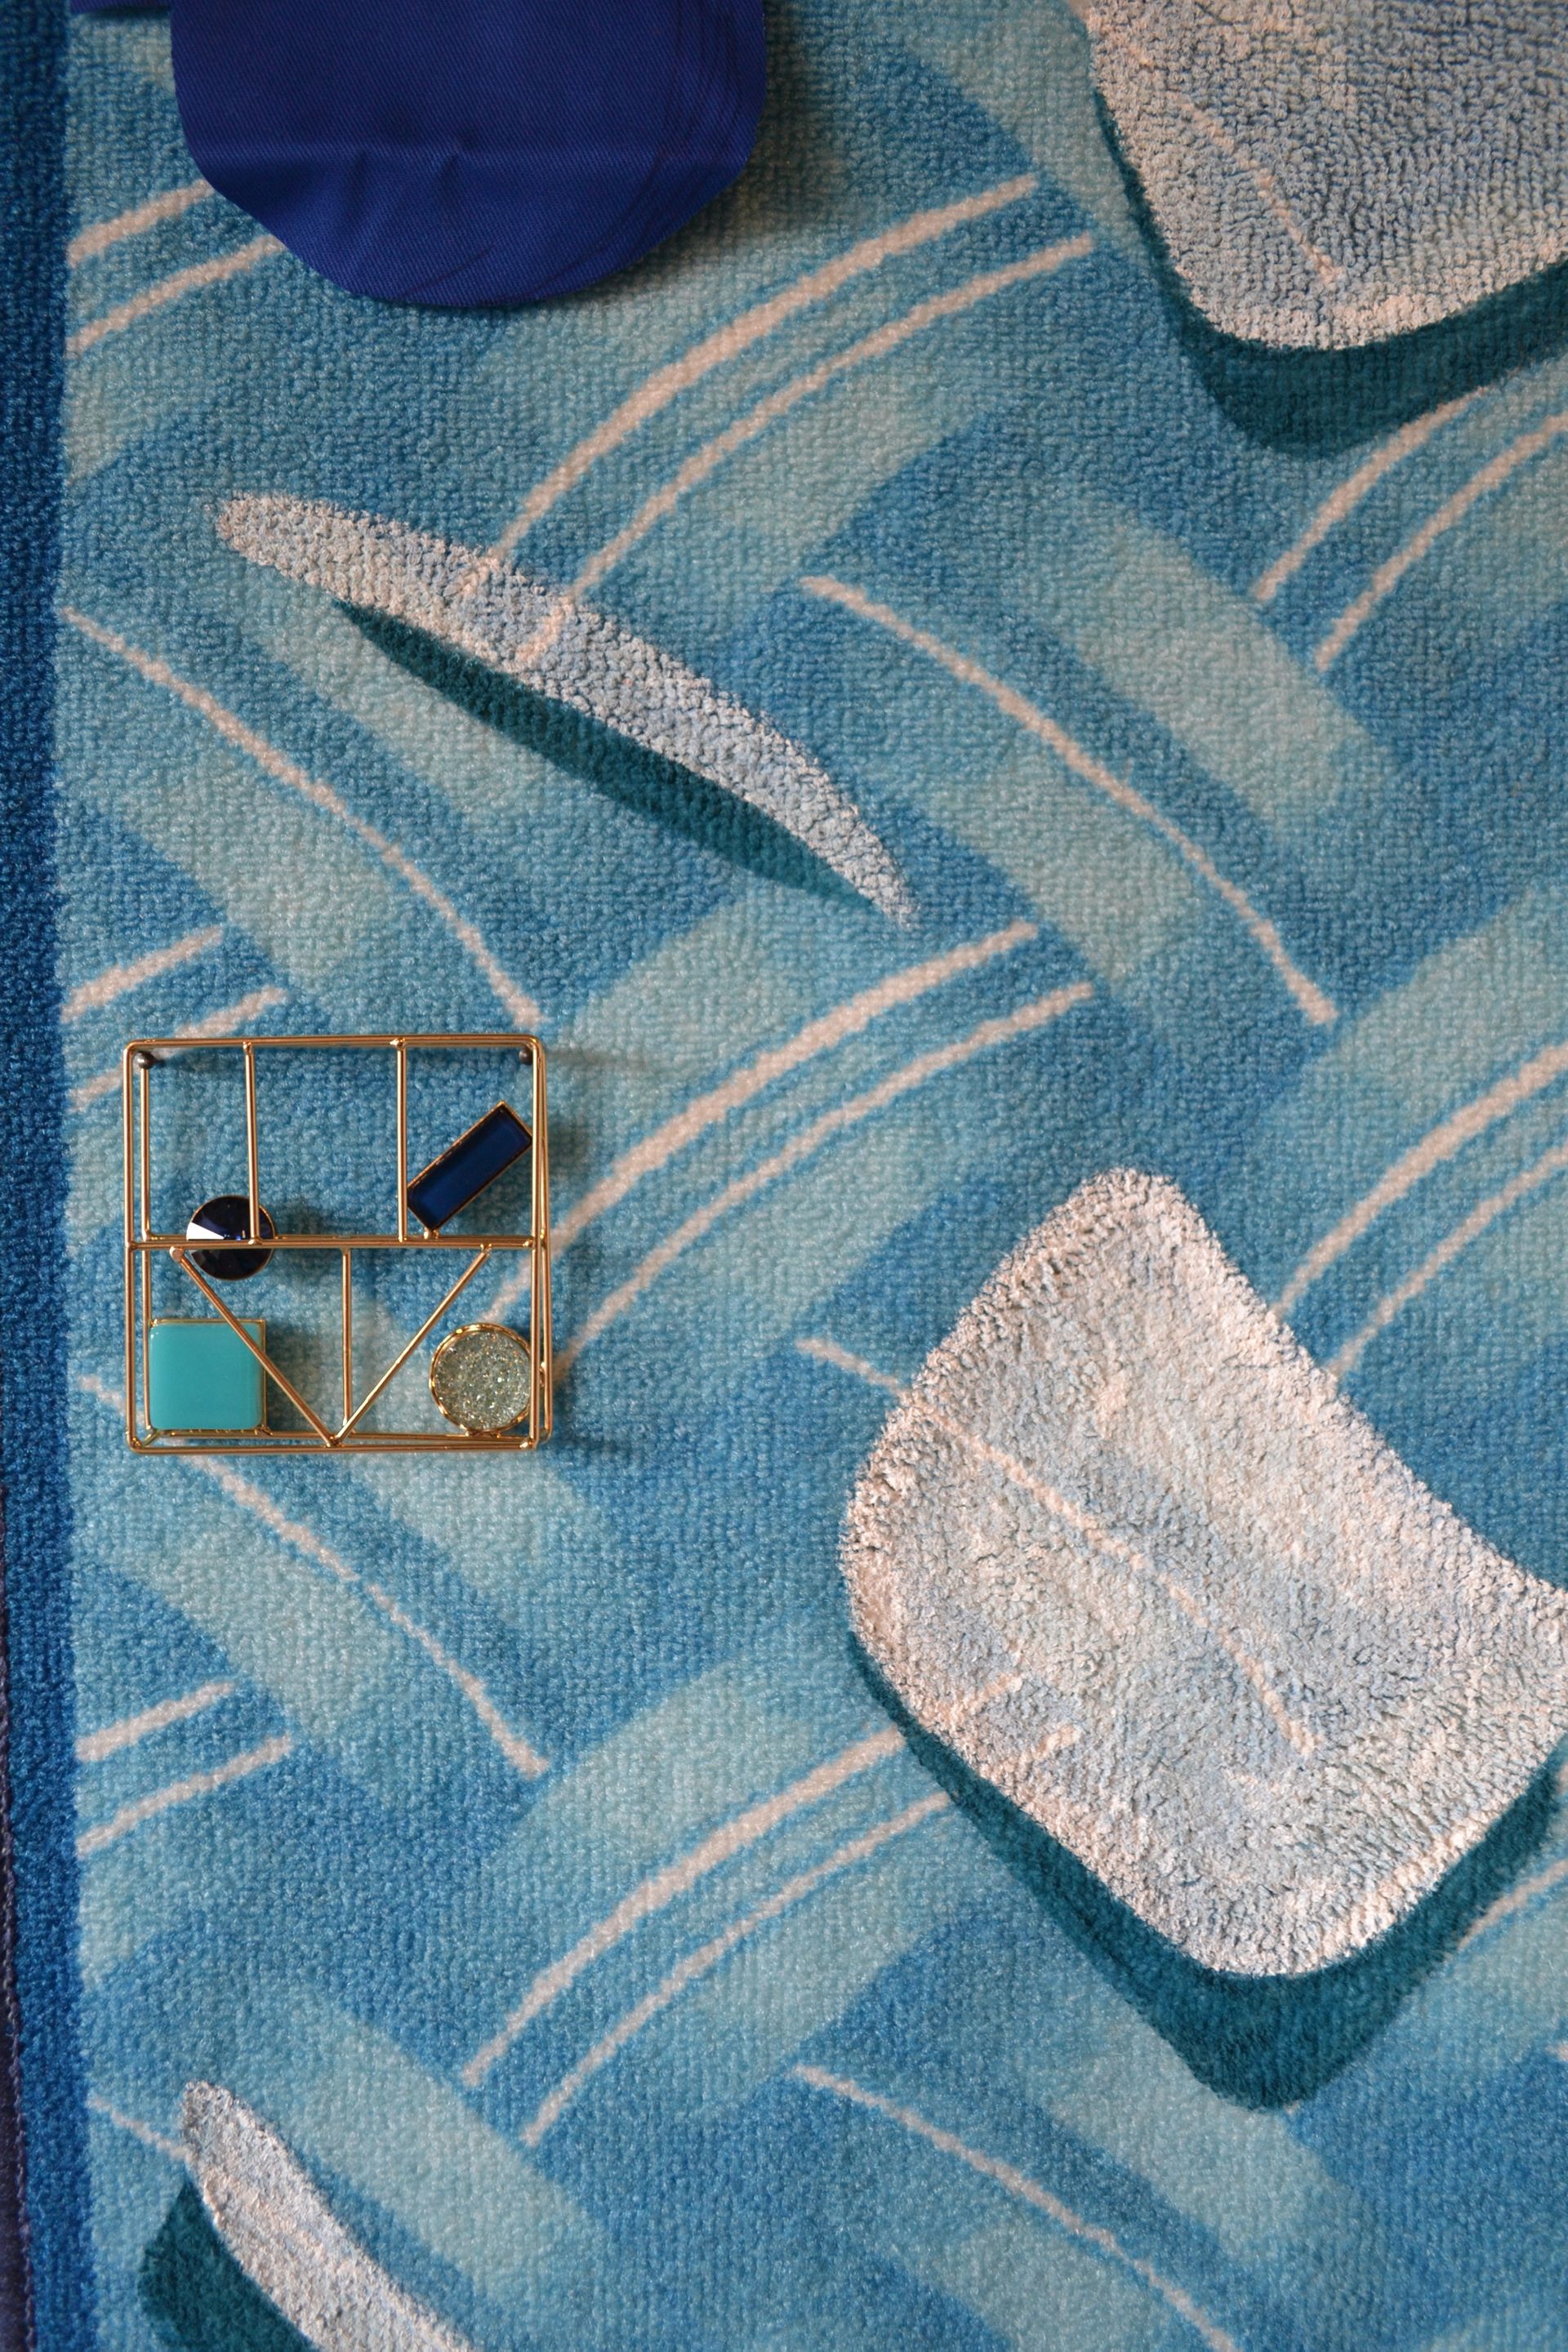 Ana Navas, Sunset (Detail), 2018, carpet, fabric, shoulder pads, acrylic, bijouterie, 220 × 75 cm
